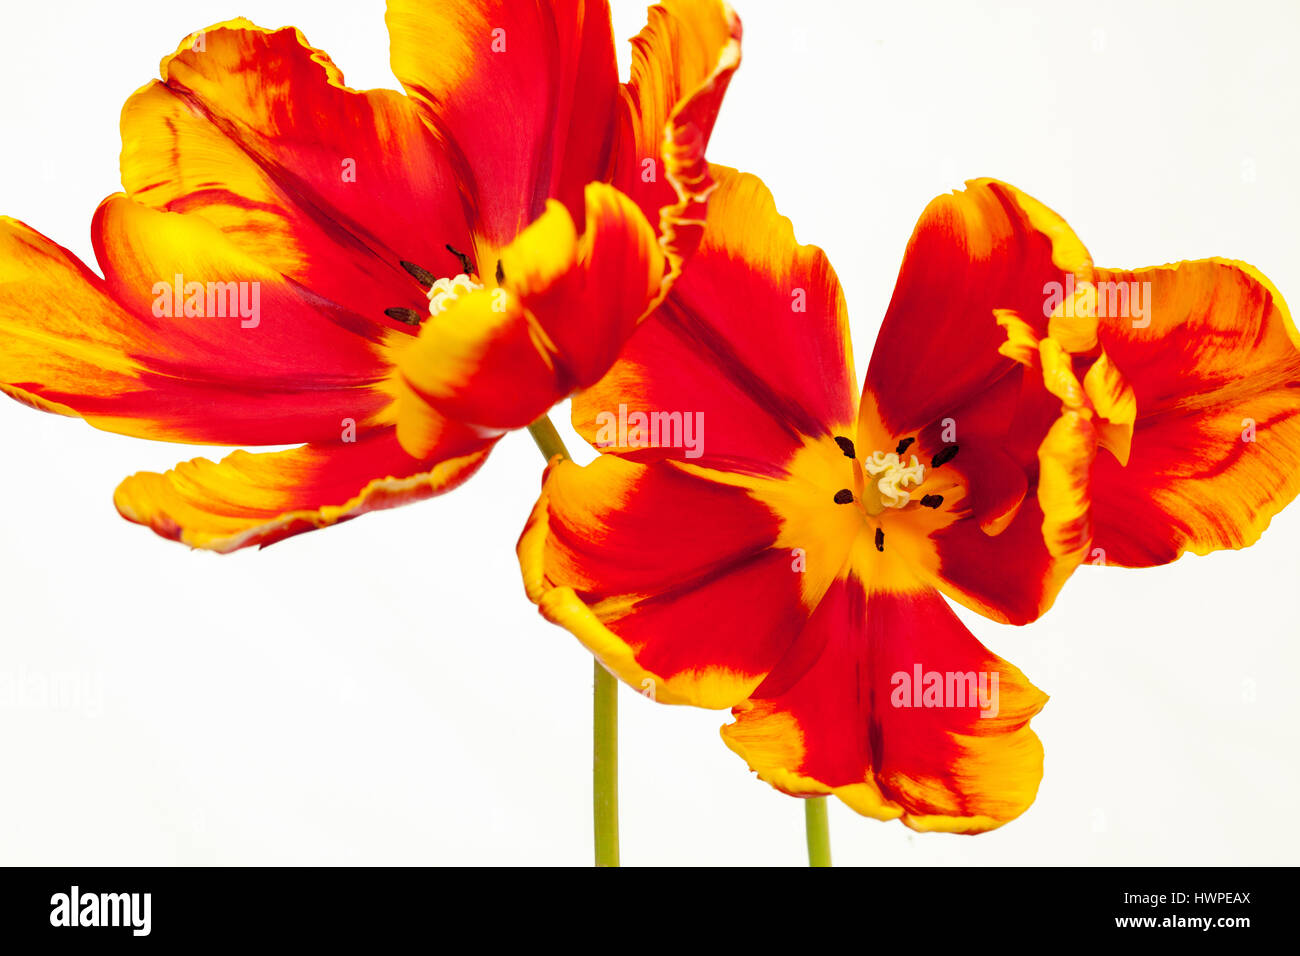 Striking Tulipa Parrot Tulips ' Bright Parrot' on a plain white background Stock Photo